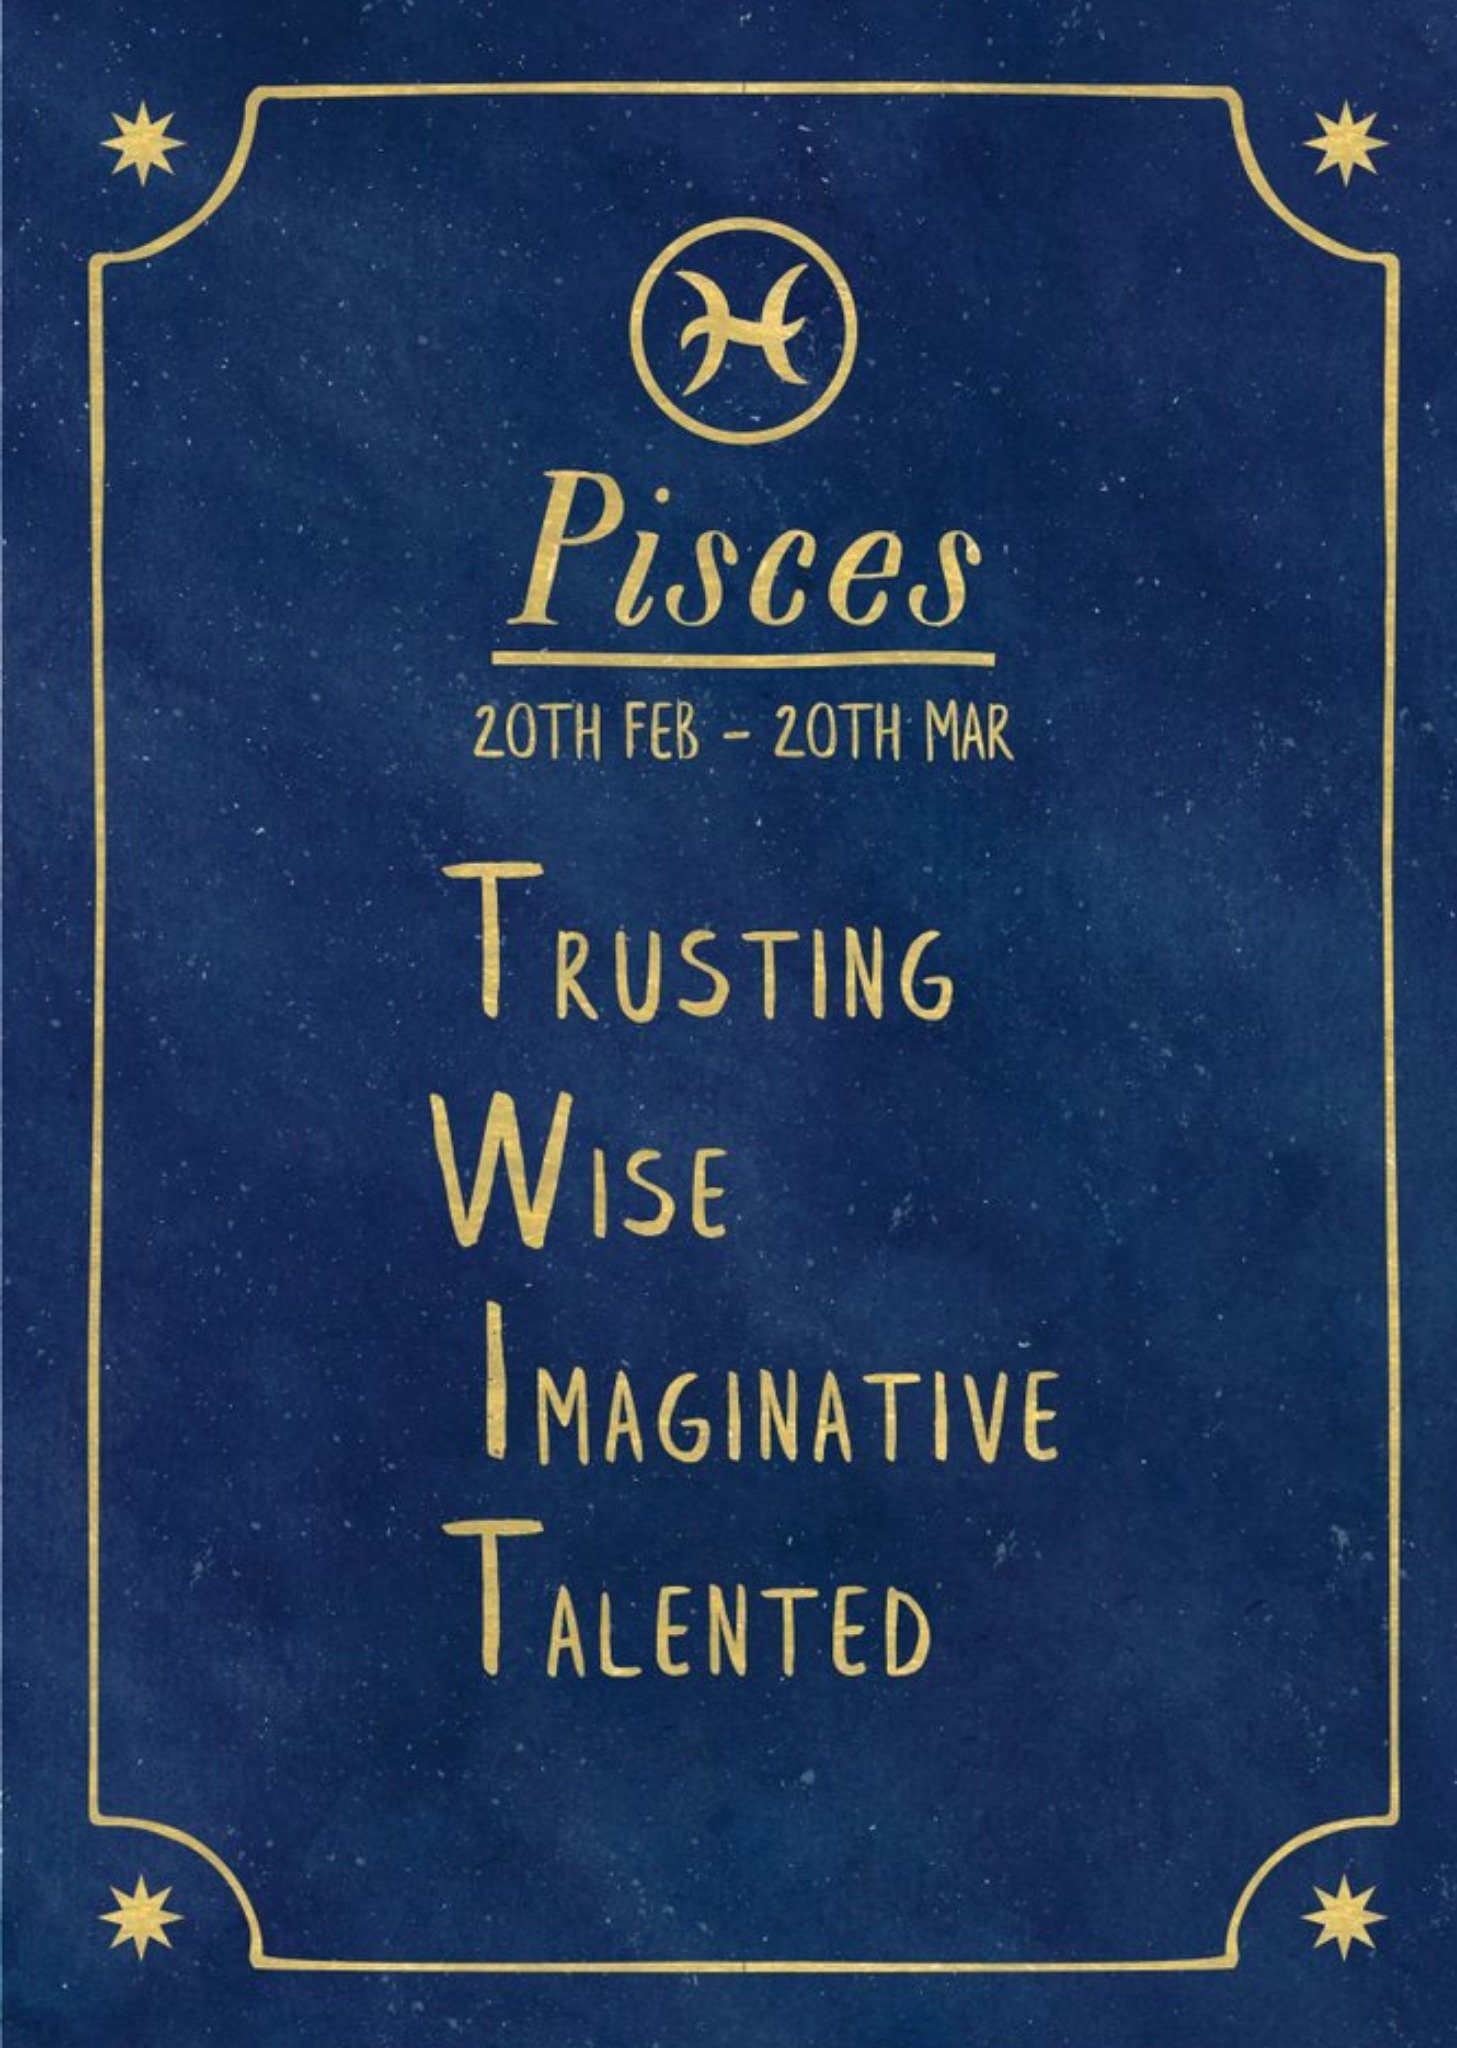 Moonpig Funny Rude Horoscope Birthday Card - Pisces, Large